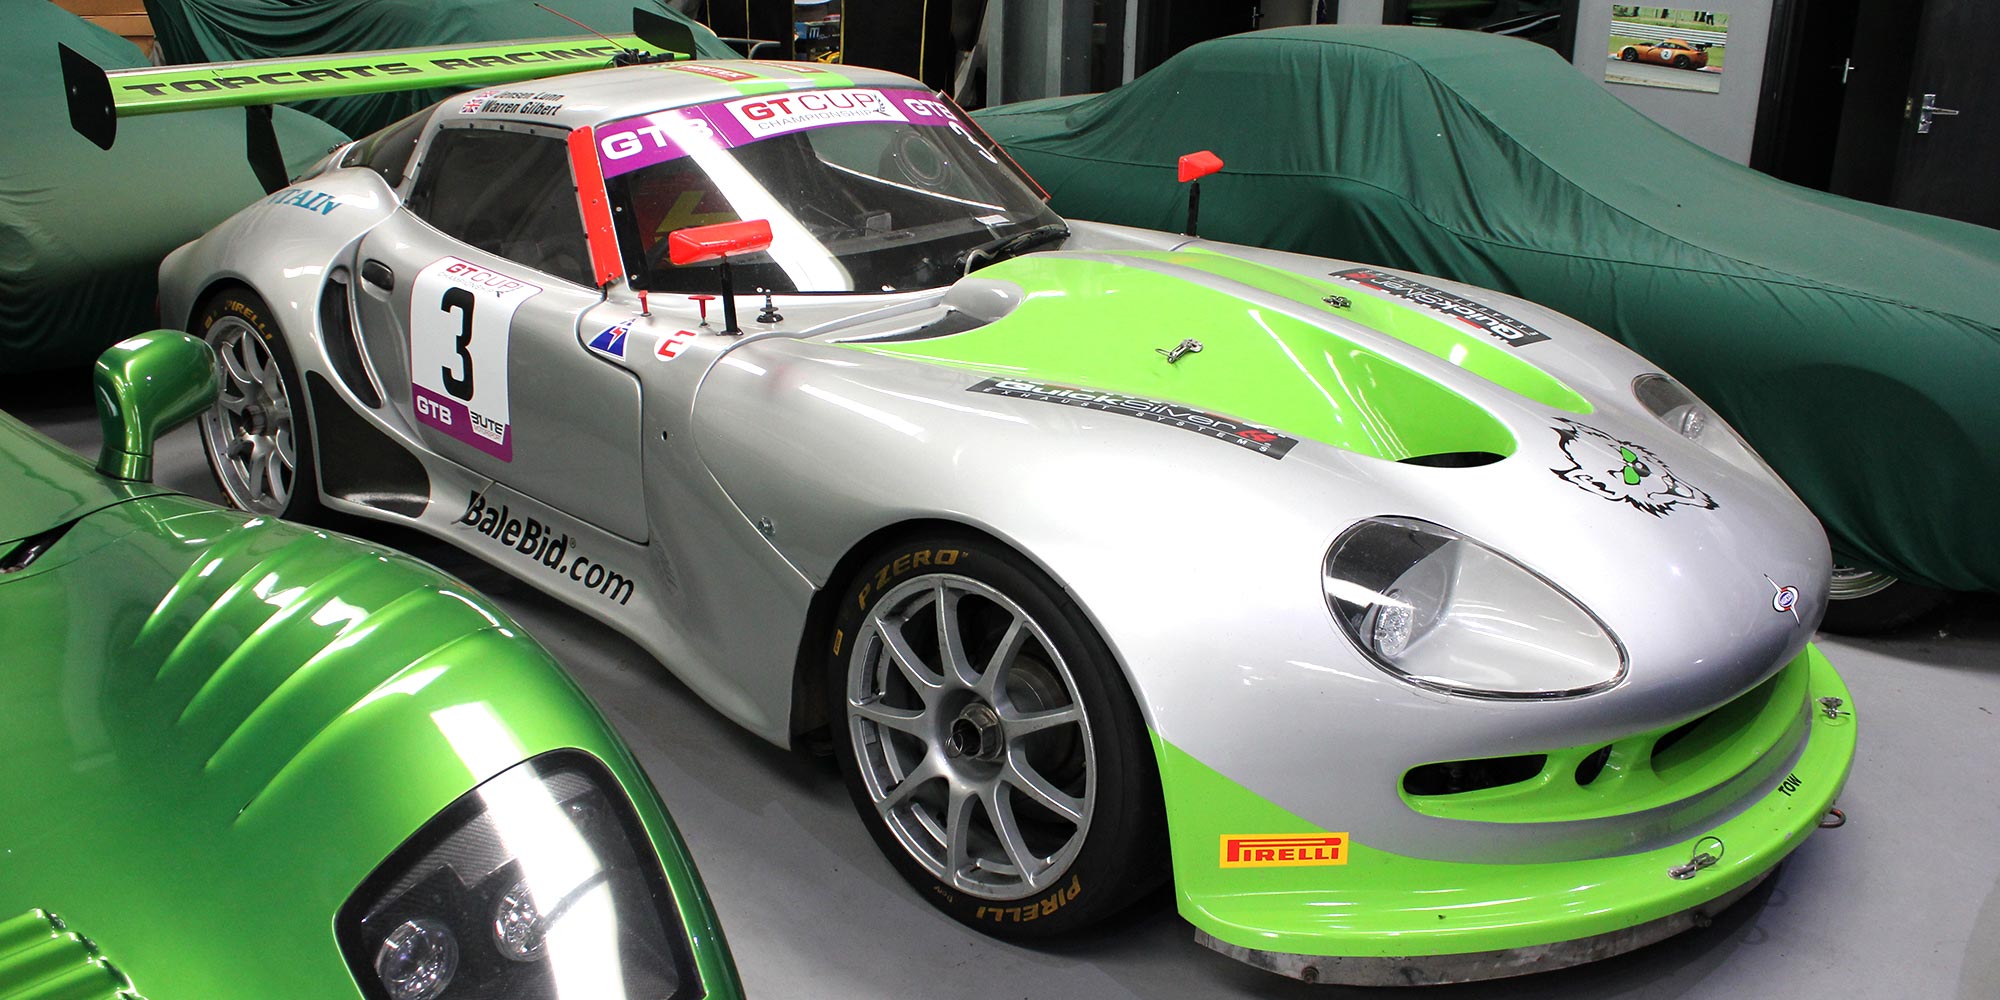 silver and green topcats racing marcos mantis performance car